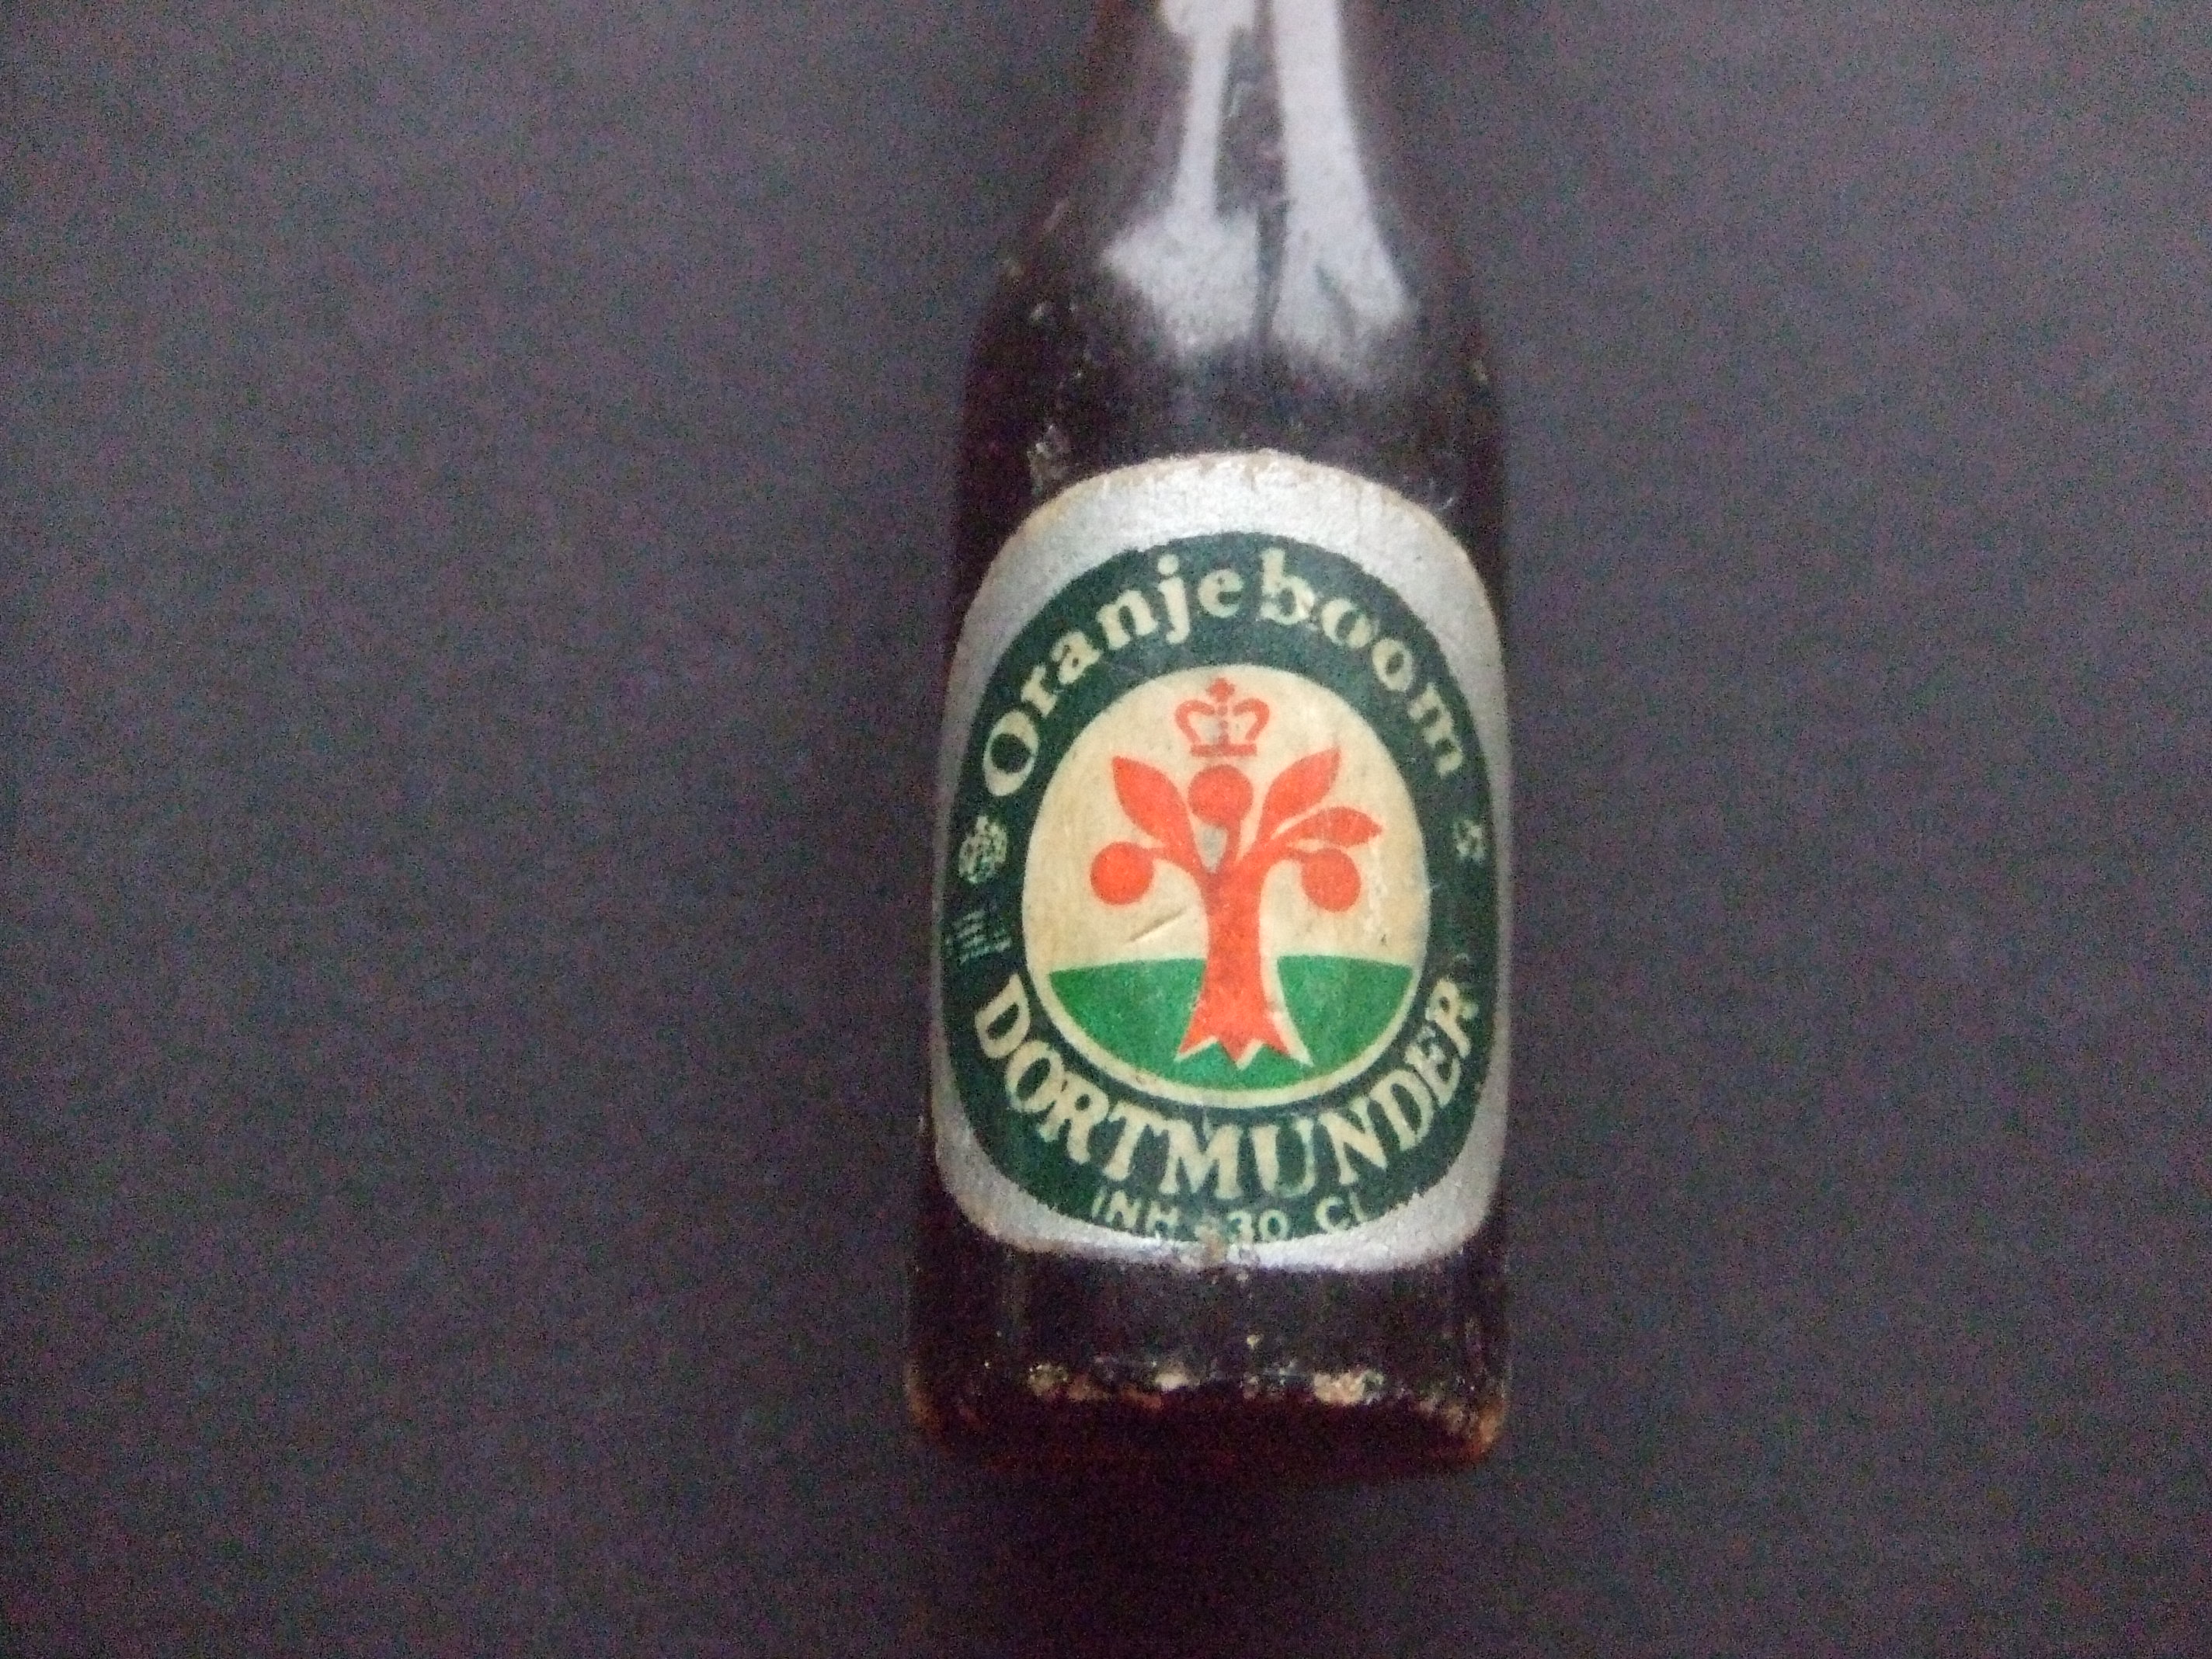 Oranjeboom , Dortmunder bier flesje oud